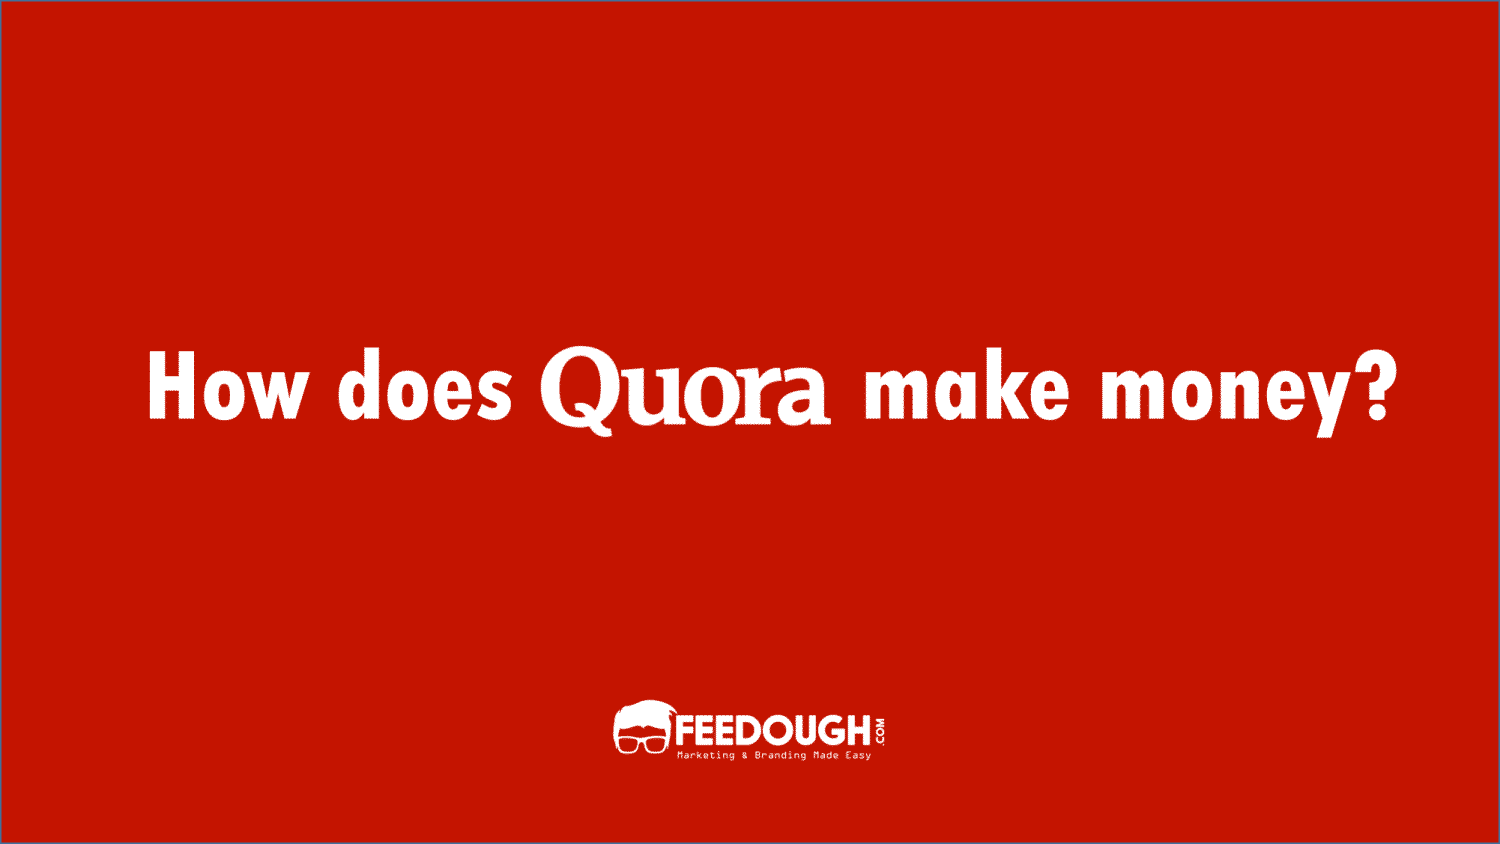 Quora Business Model | How does Quora Make Money?